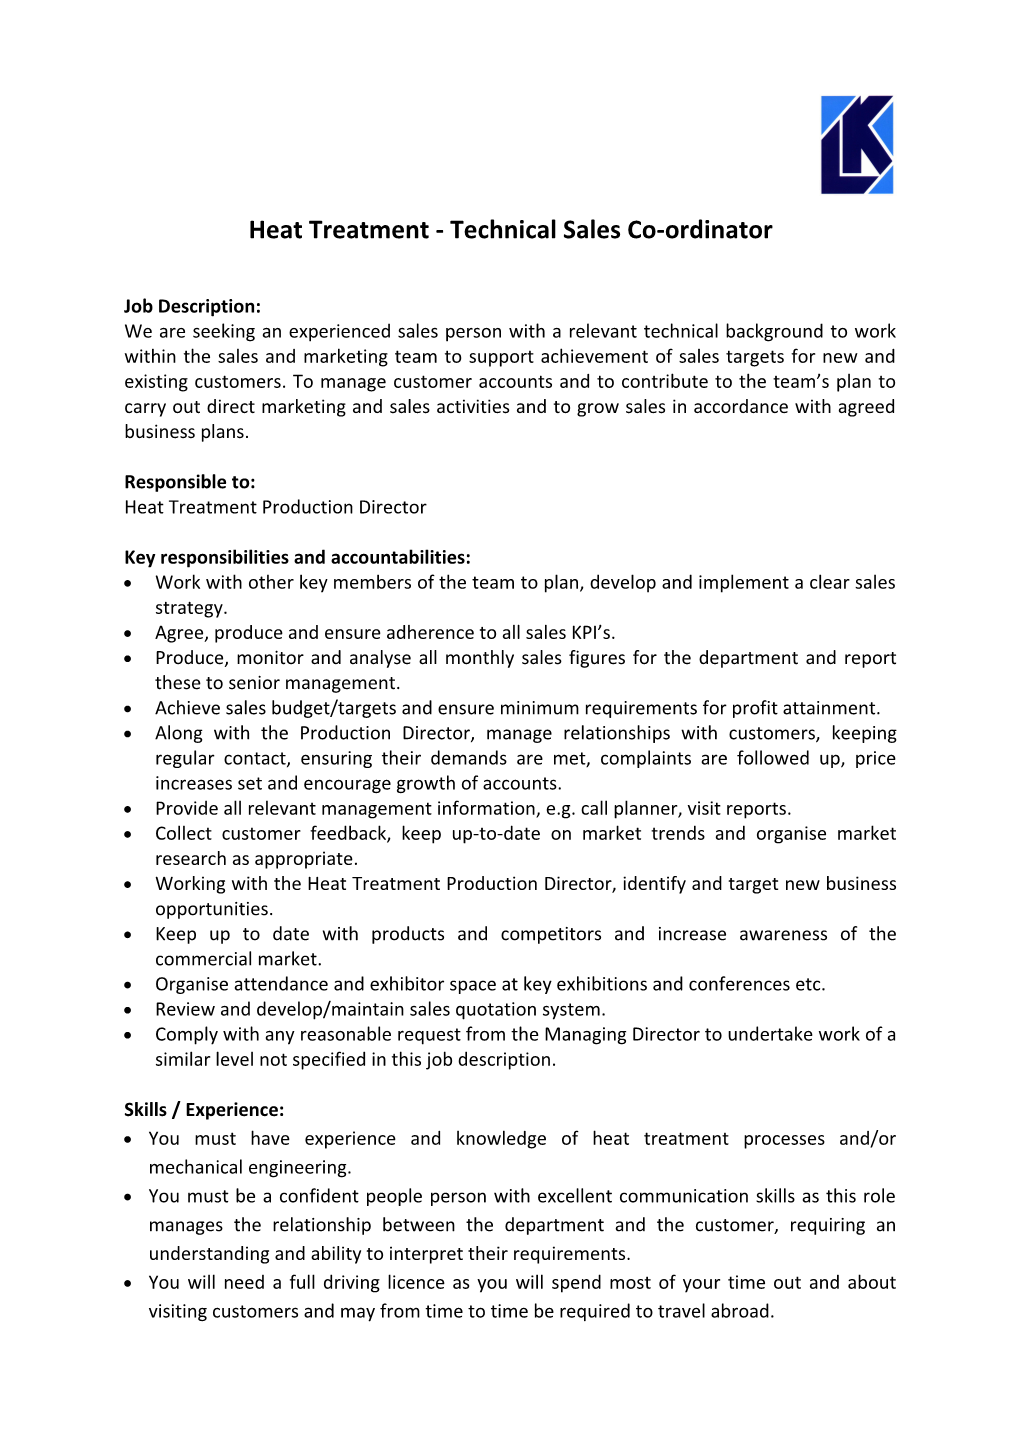 Heat Treatment - Technical Sales Co-Ordinator